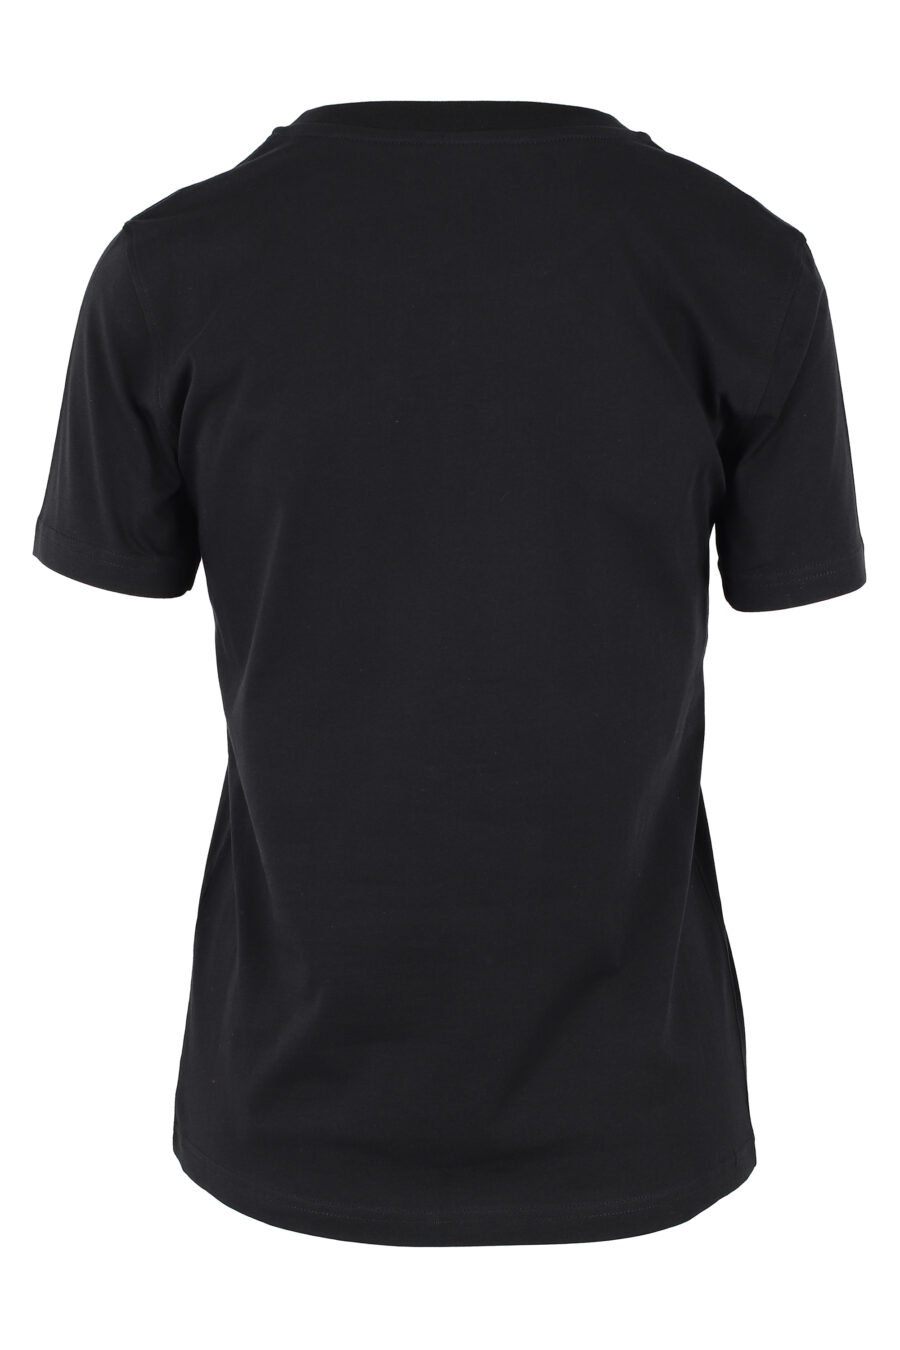 Camiseta negra con logo monocromático - IMG 5040